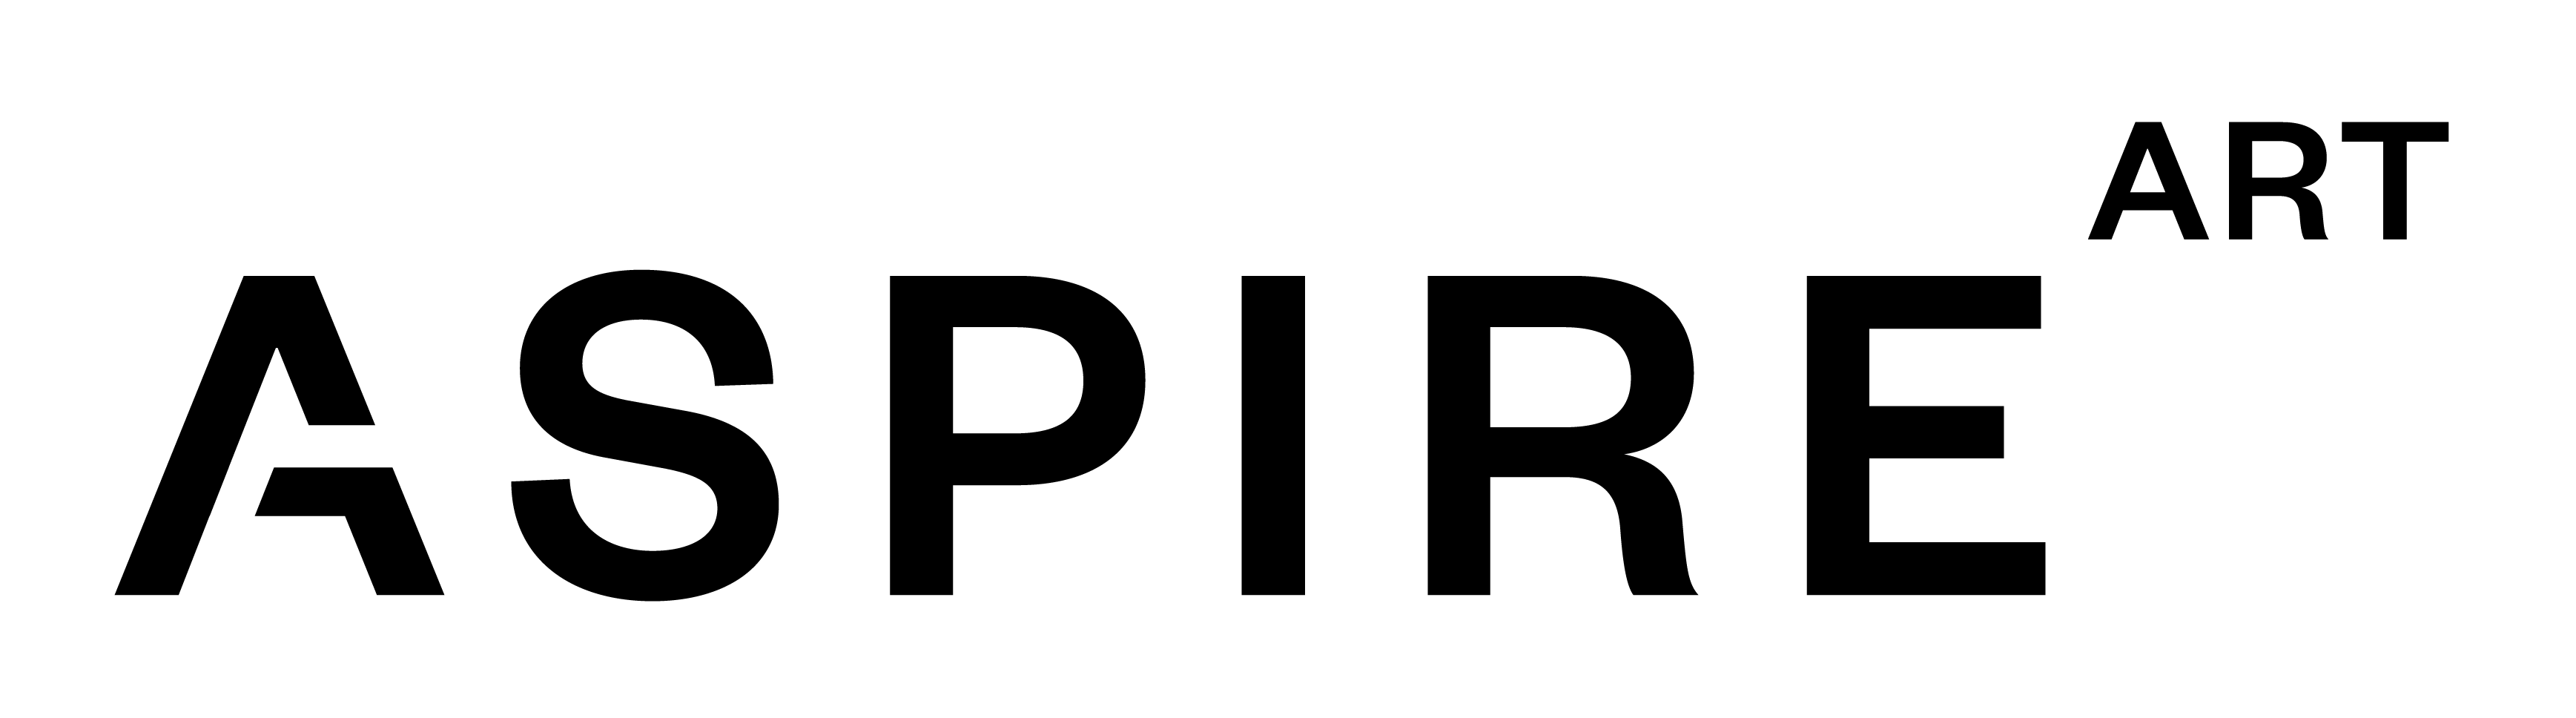 Aspire logo. Аспир логотип. Aspire Lifestyles logo vector. Aspire logo PNG. Aspiring сайт